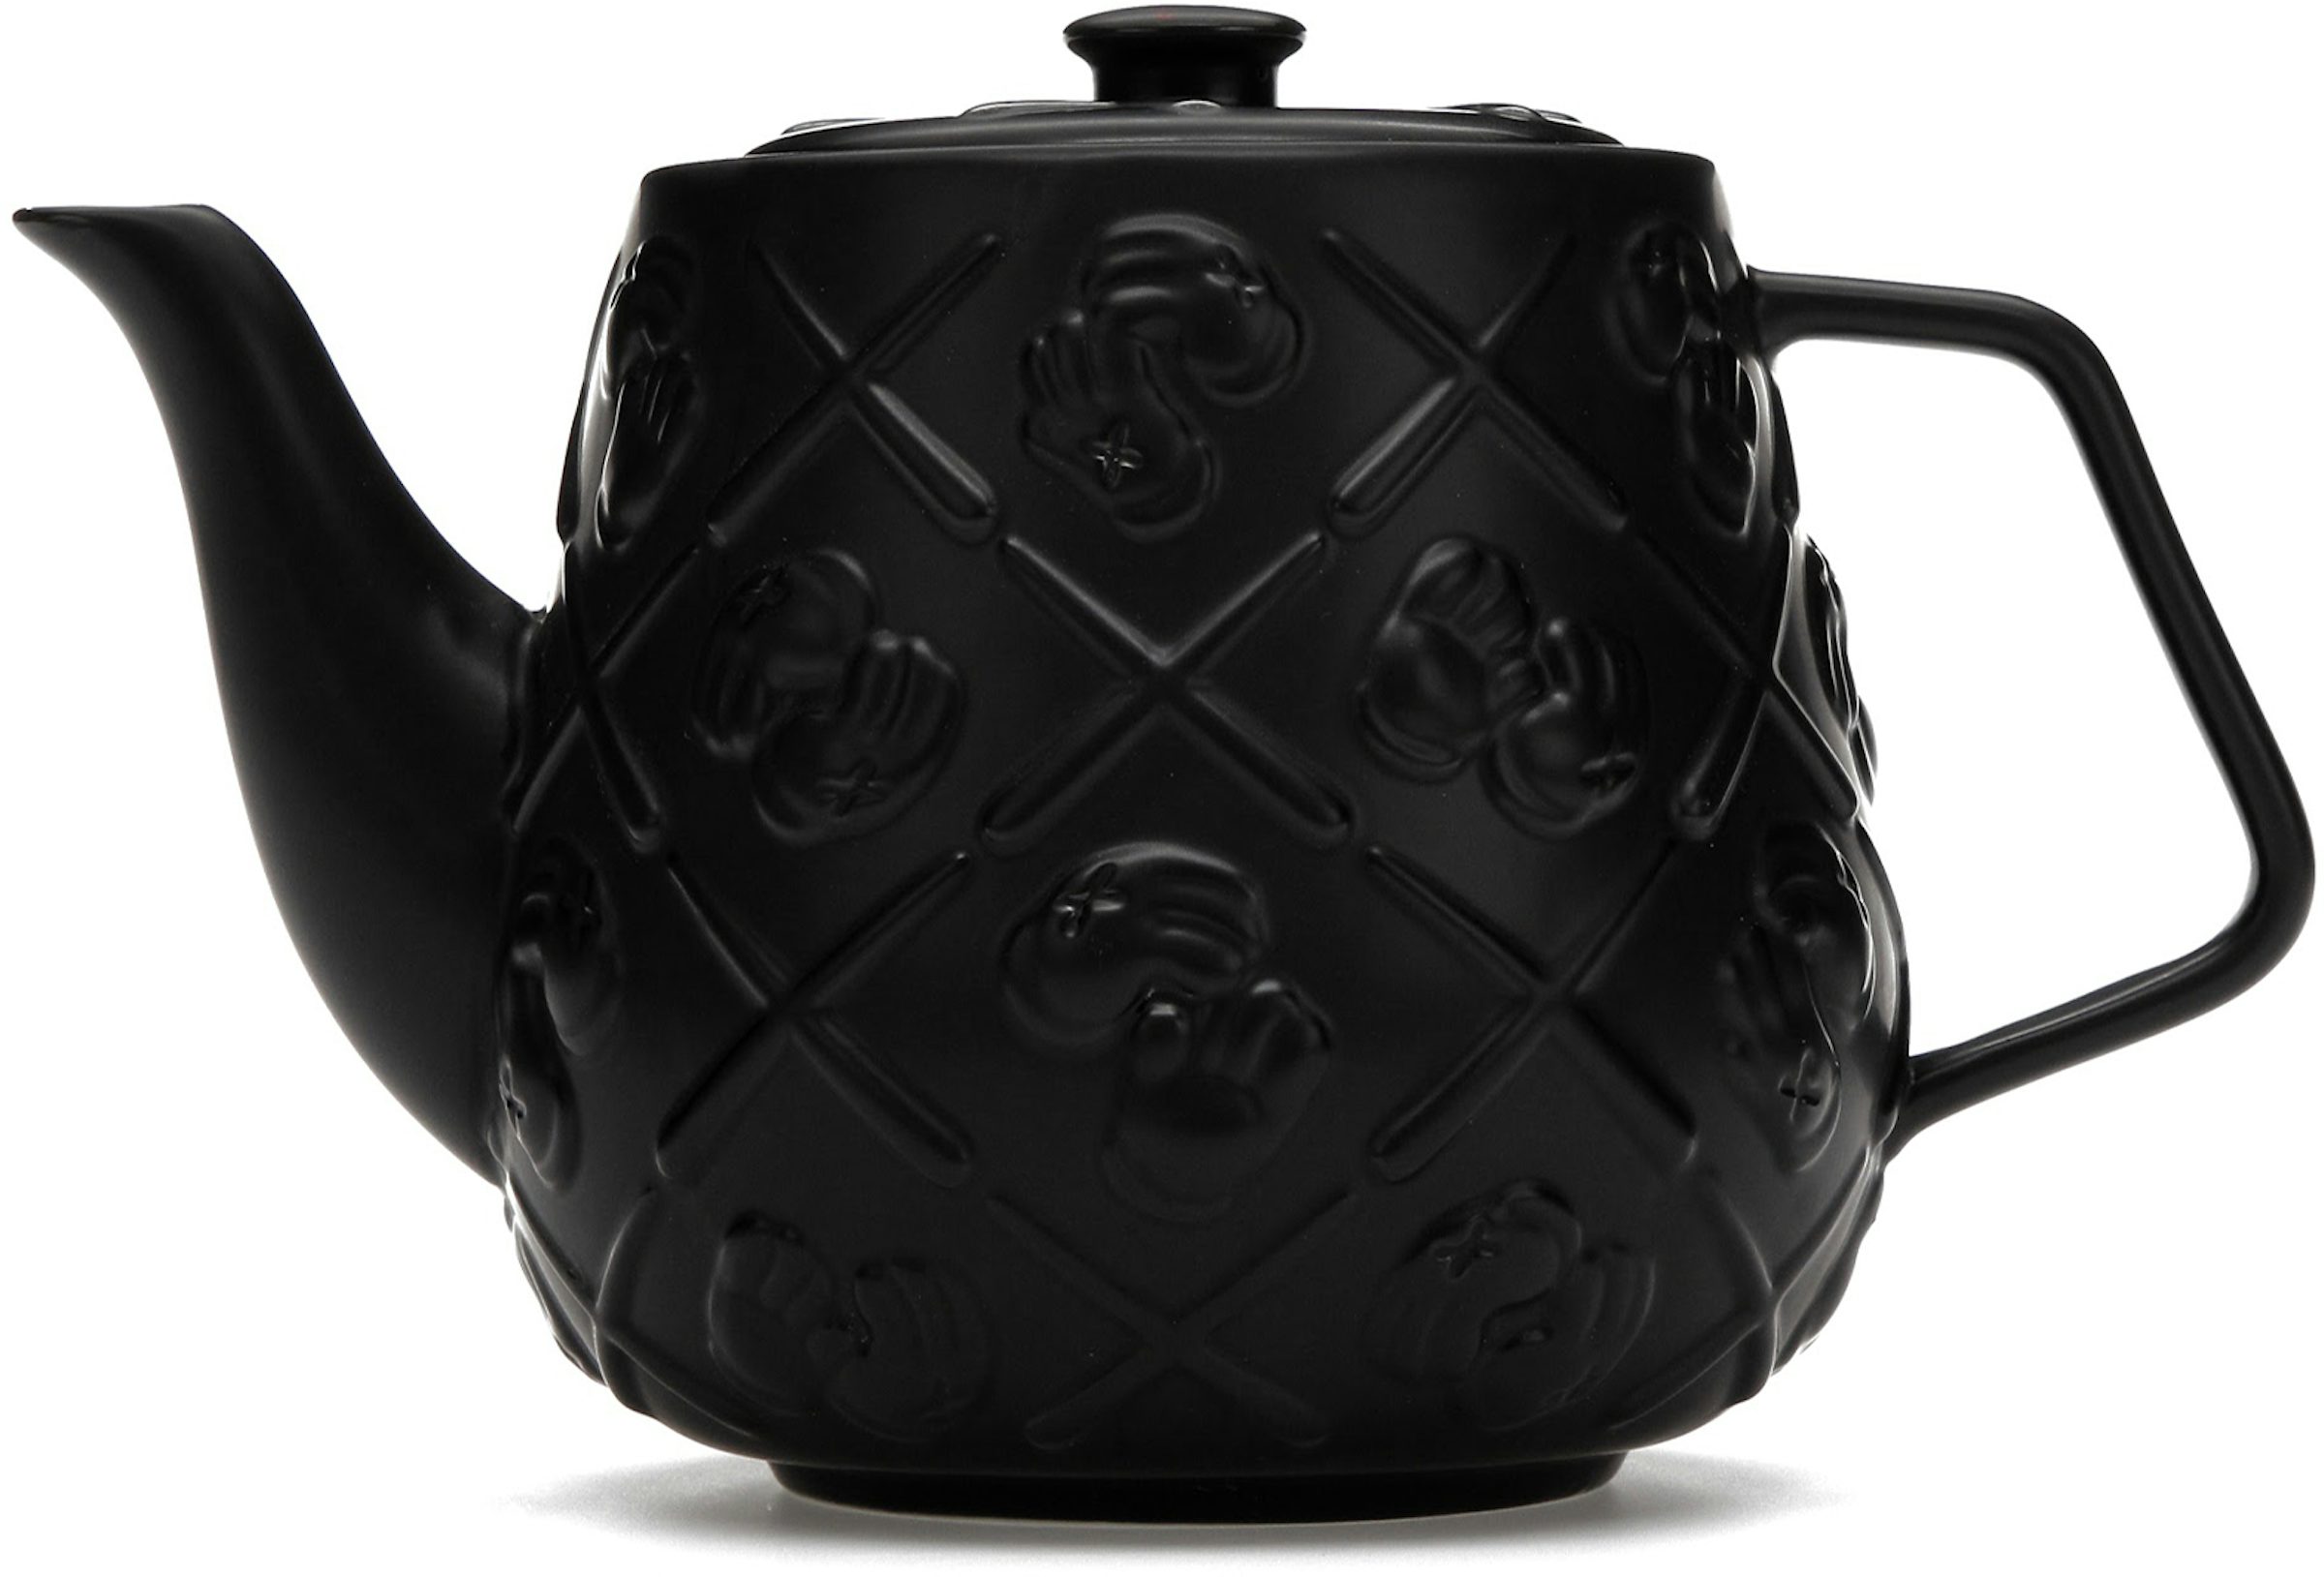 https://images.stockx.com/images/KAWS-Teapot-Ceramic-Black-Product.jpg?fit=fill&bg=FFFFFF&w=1200&h=857&fm=jpg&auto=compress&dpr=2&trim=color&updated_at=1655474362&q=60